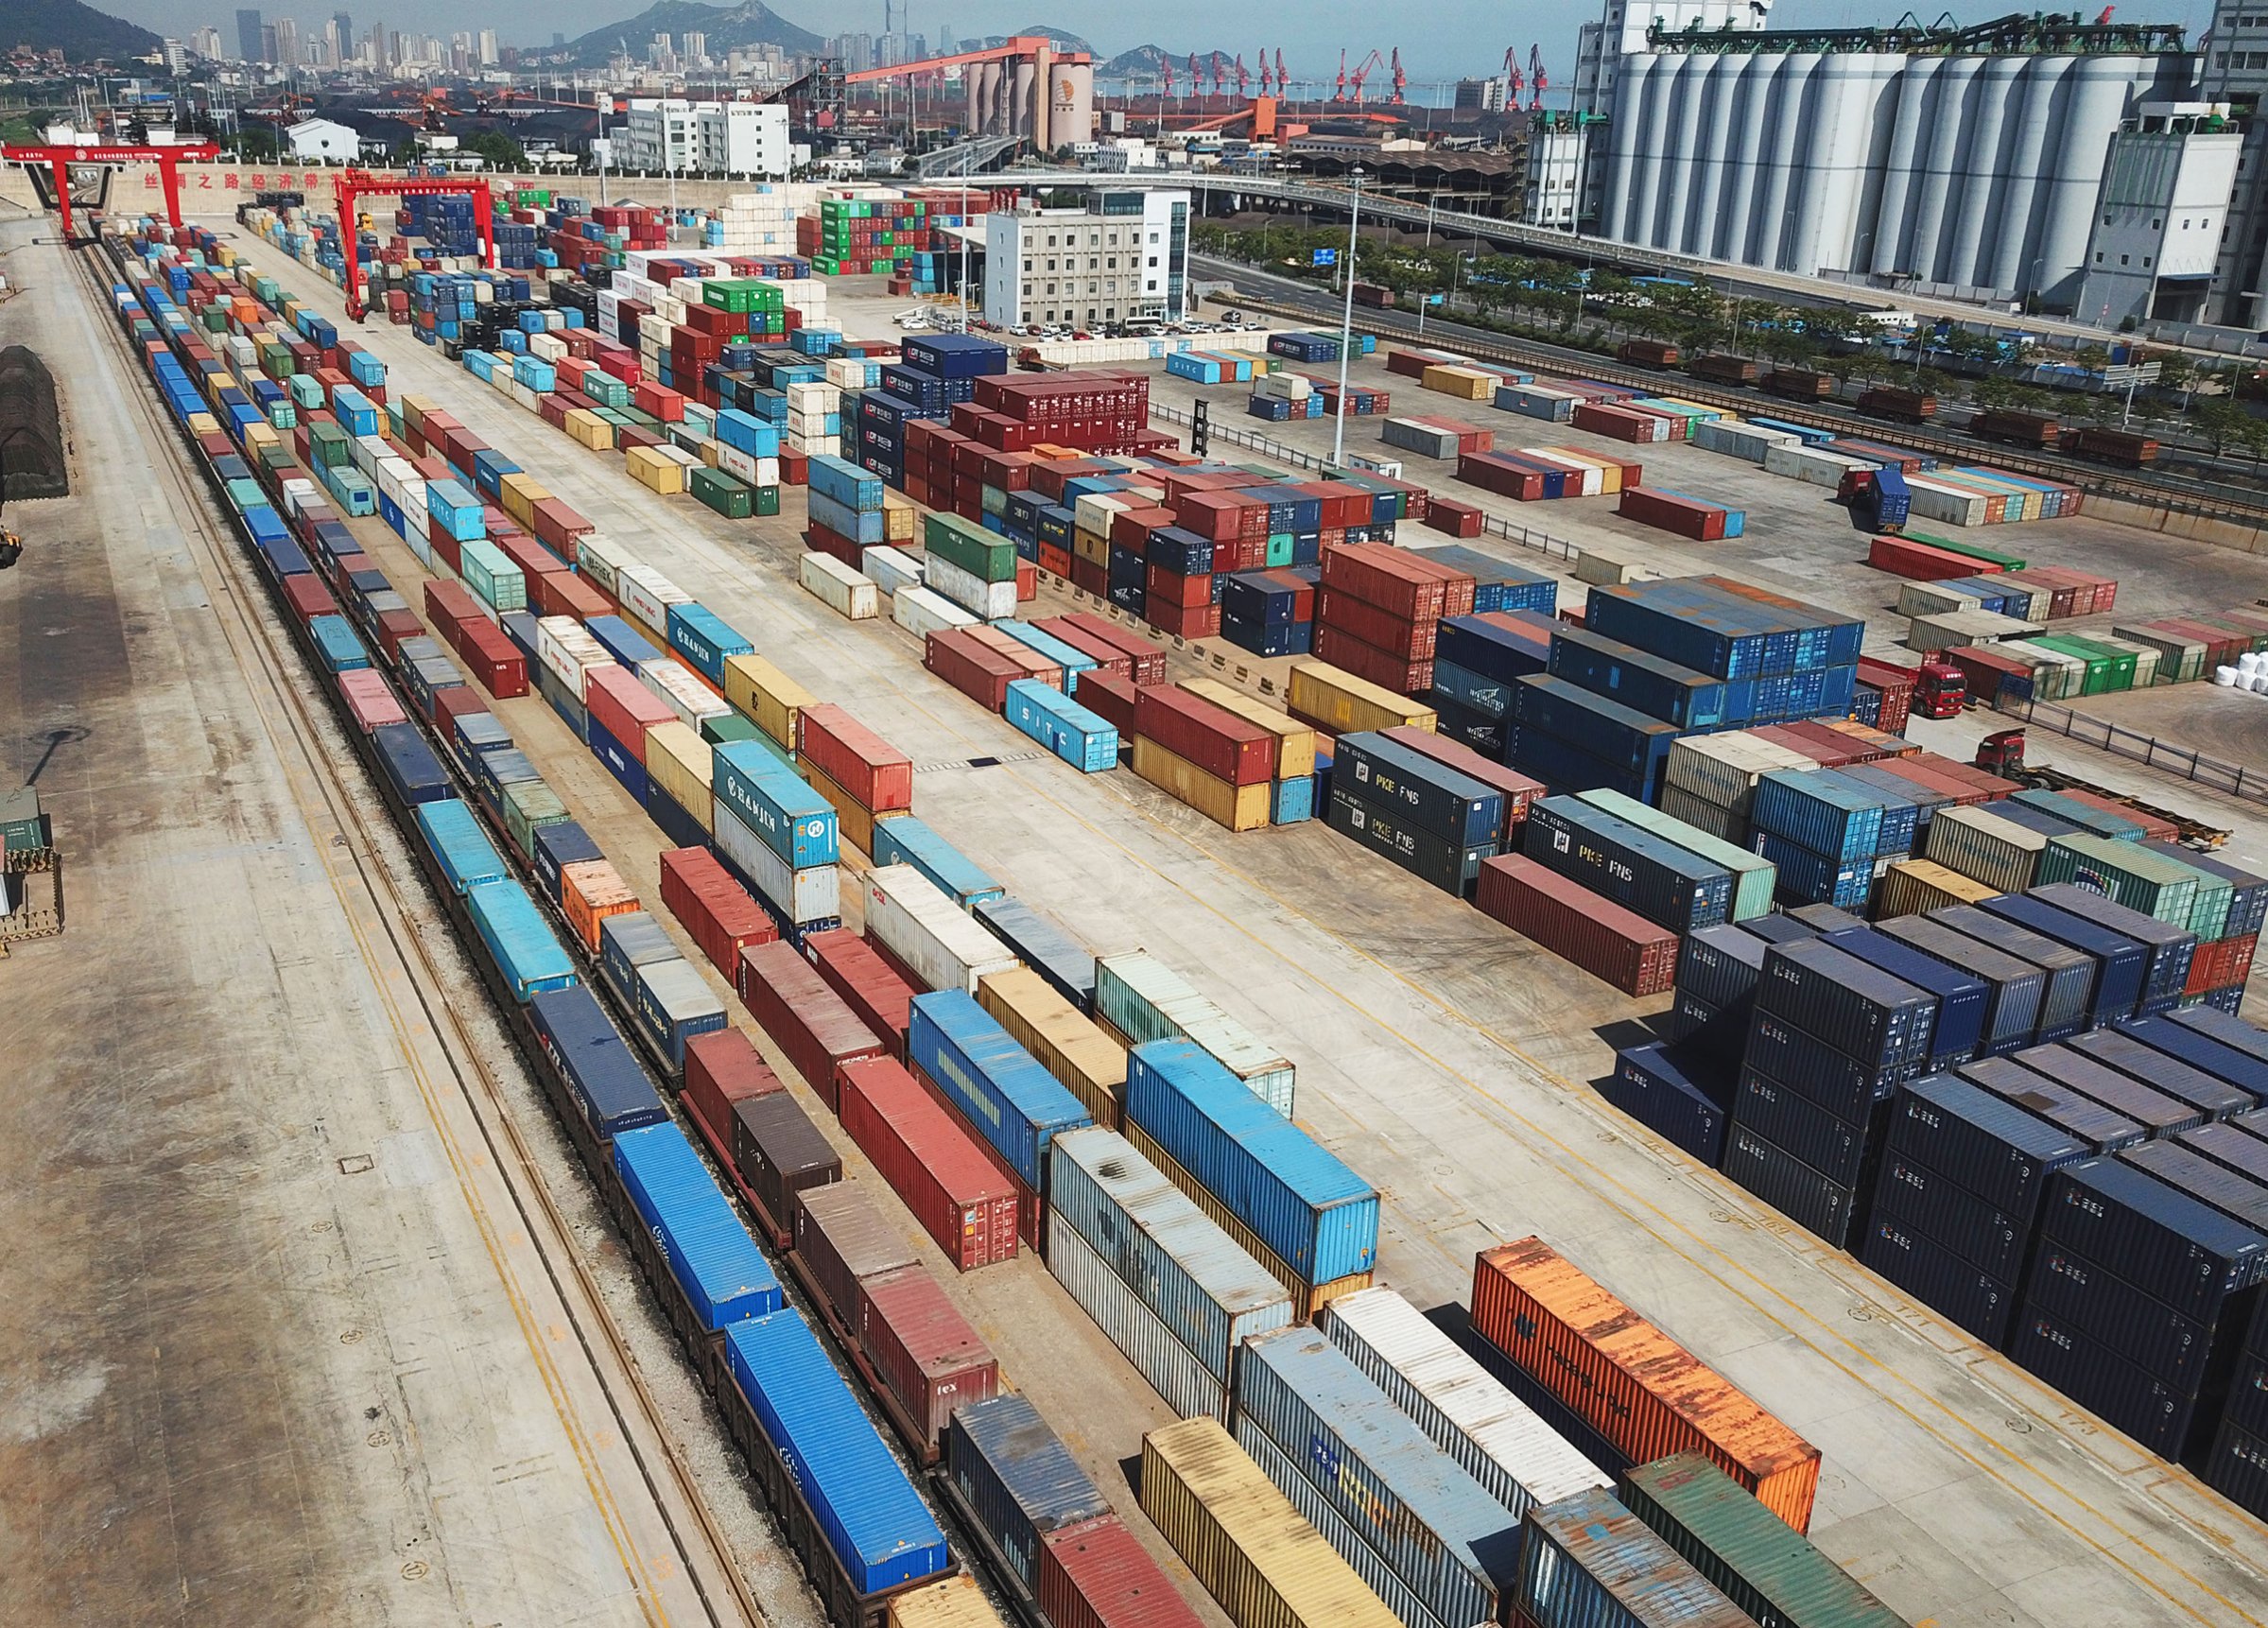 Shipping containers at the China-Kazakhstan logistics terminal on May 31, 2018 in Lianyungang, Jiangsu Province of China.